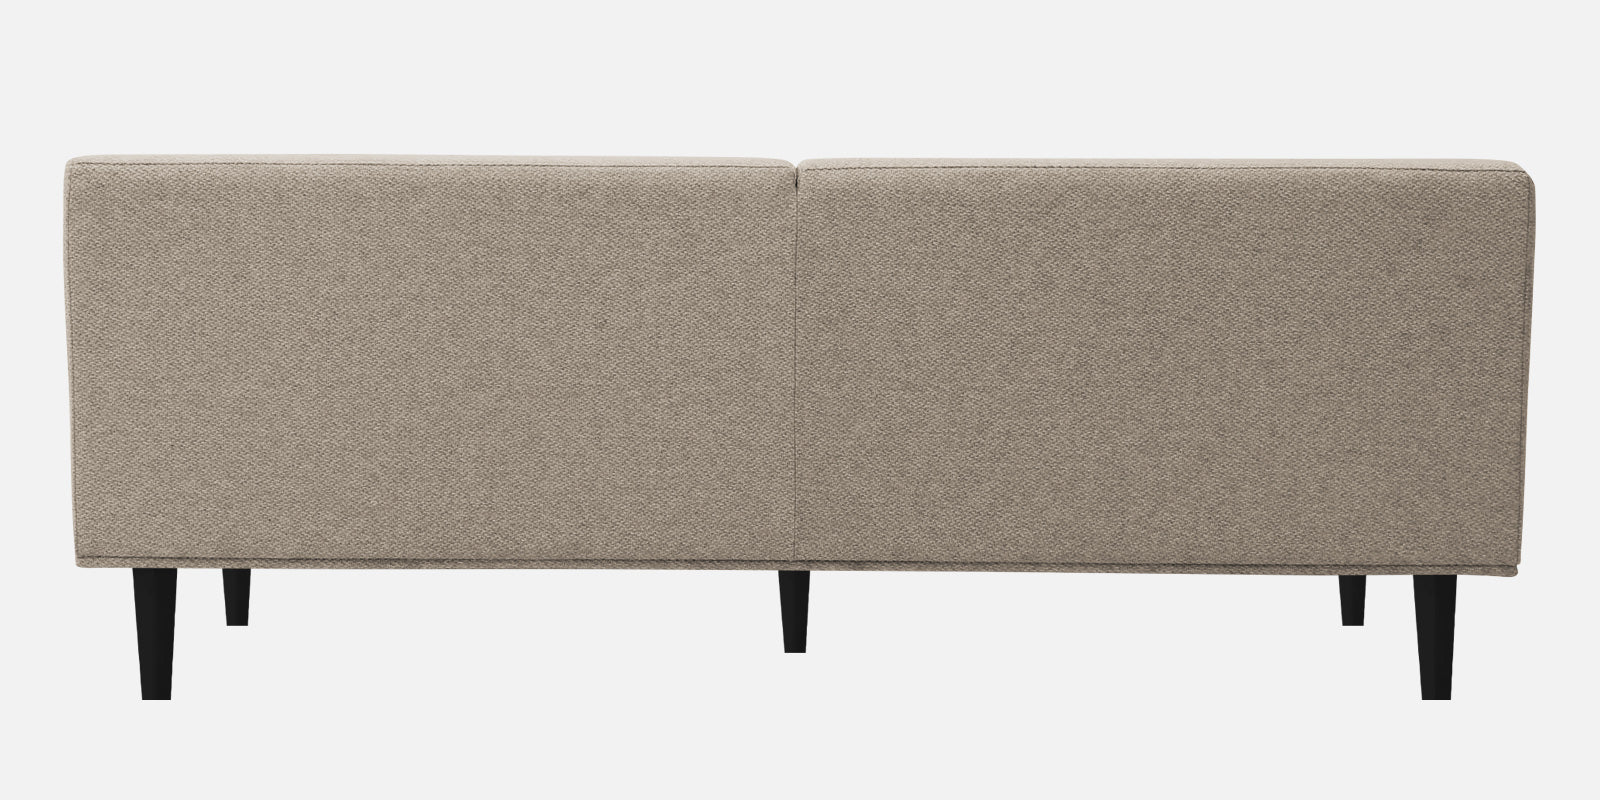 Cobby Fabric 3 Seater Sofa in Khaki Beige Colour